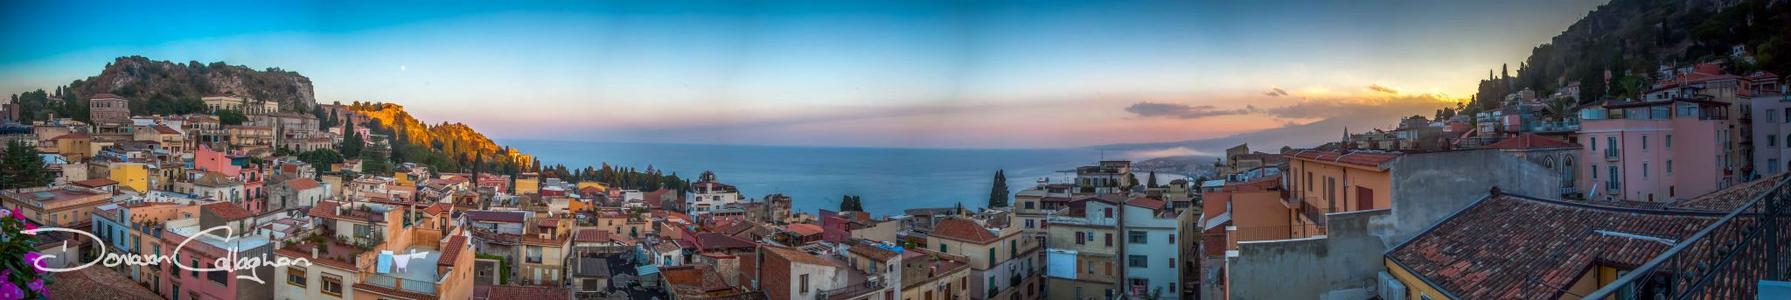 Panorama of city scape Taormina